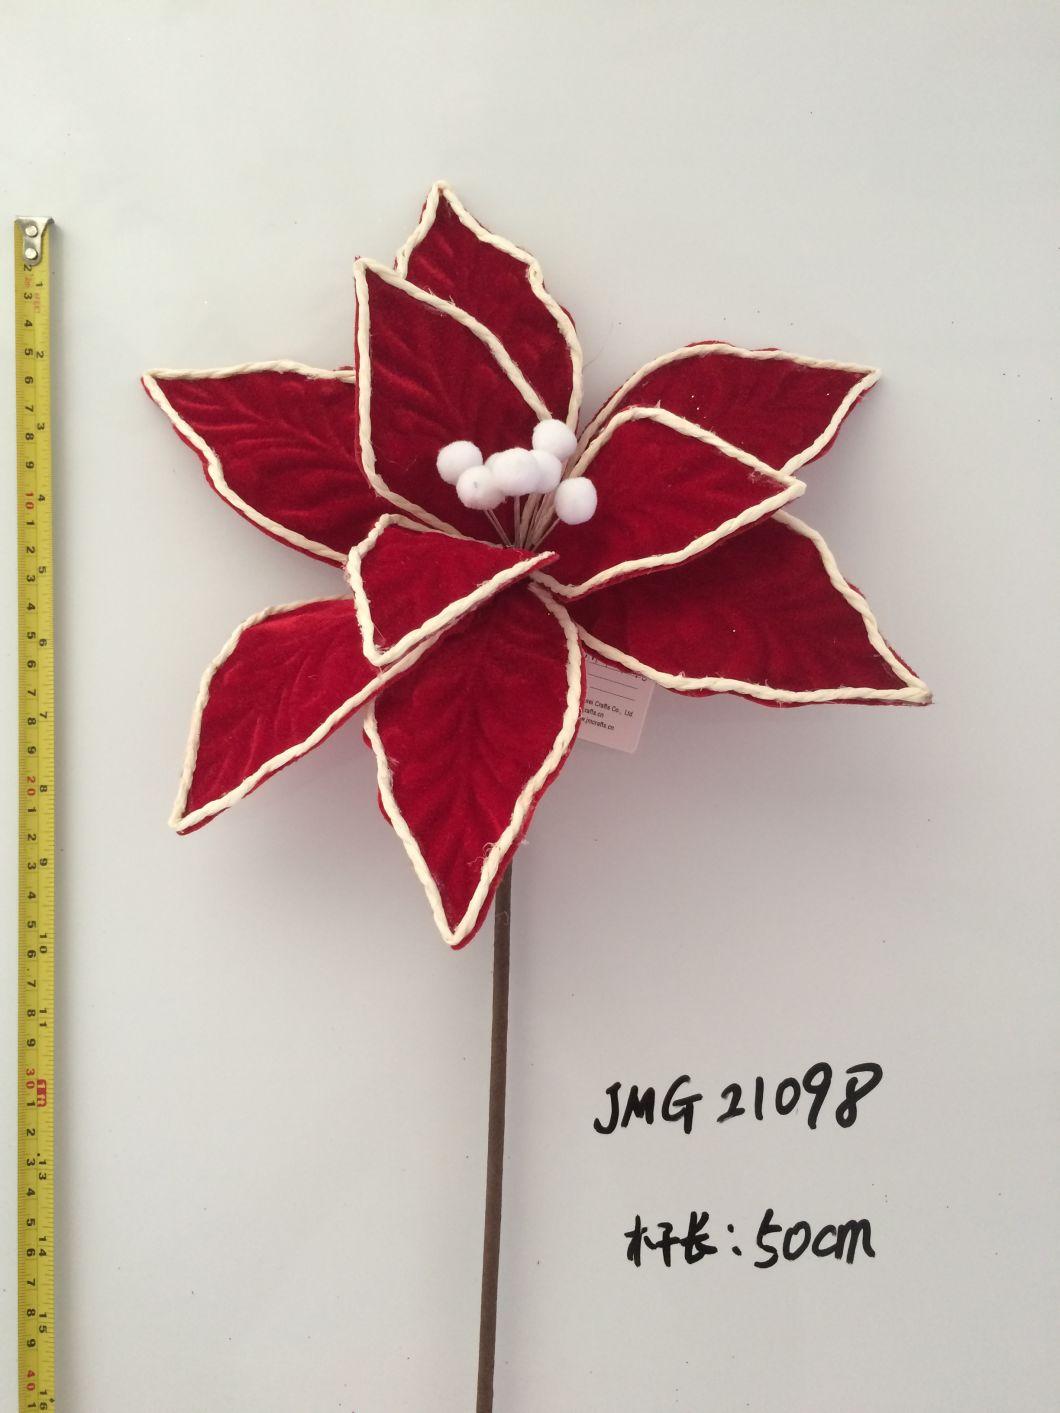 Ytcf106 Velvet Material Poinsettia Flower with Factory Price